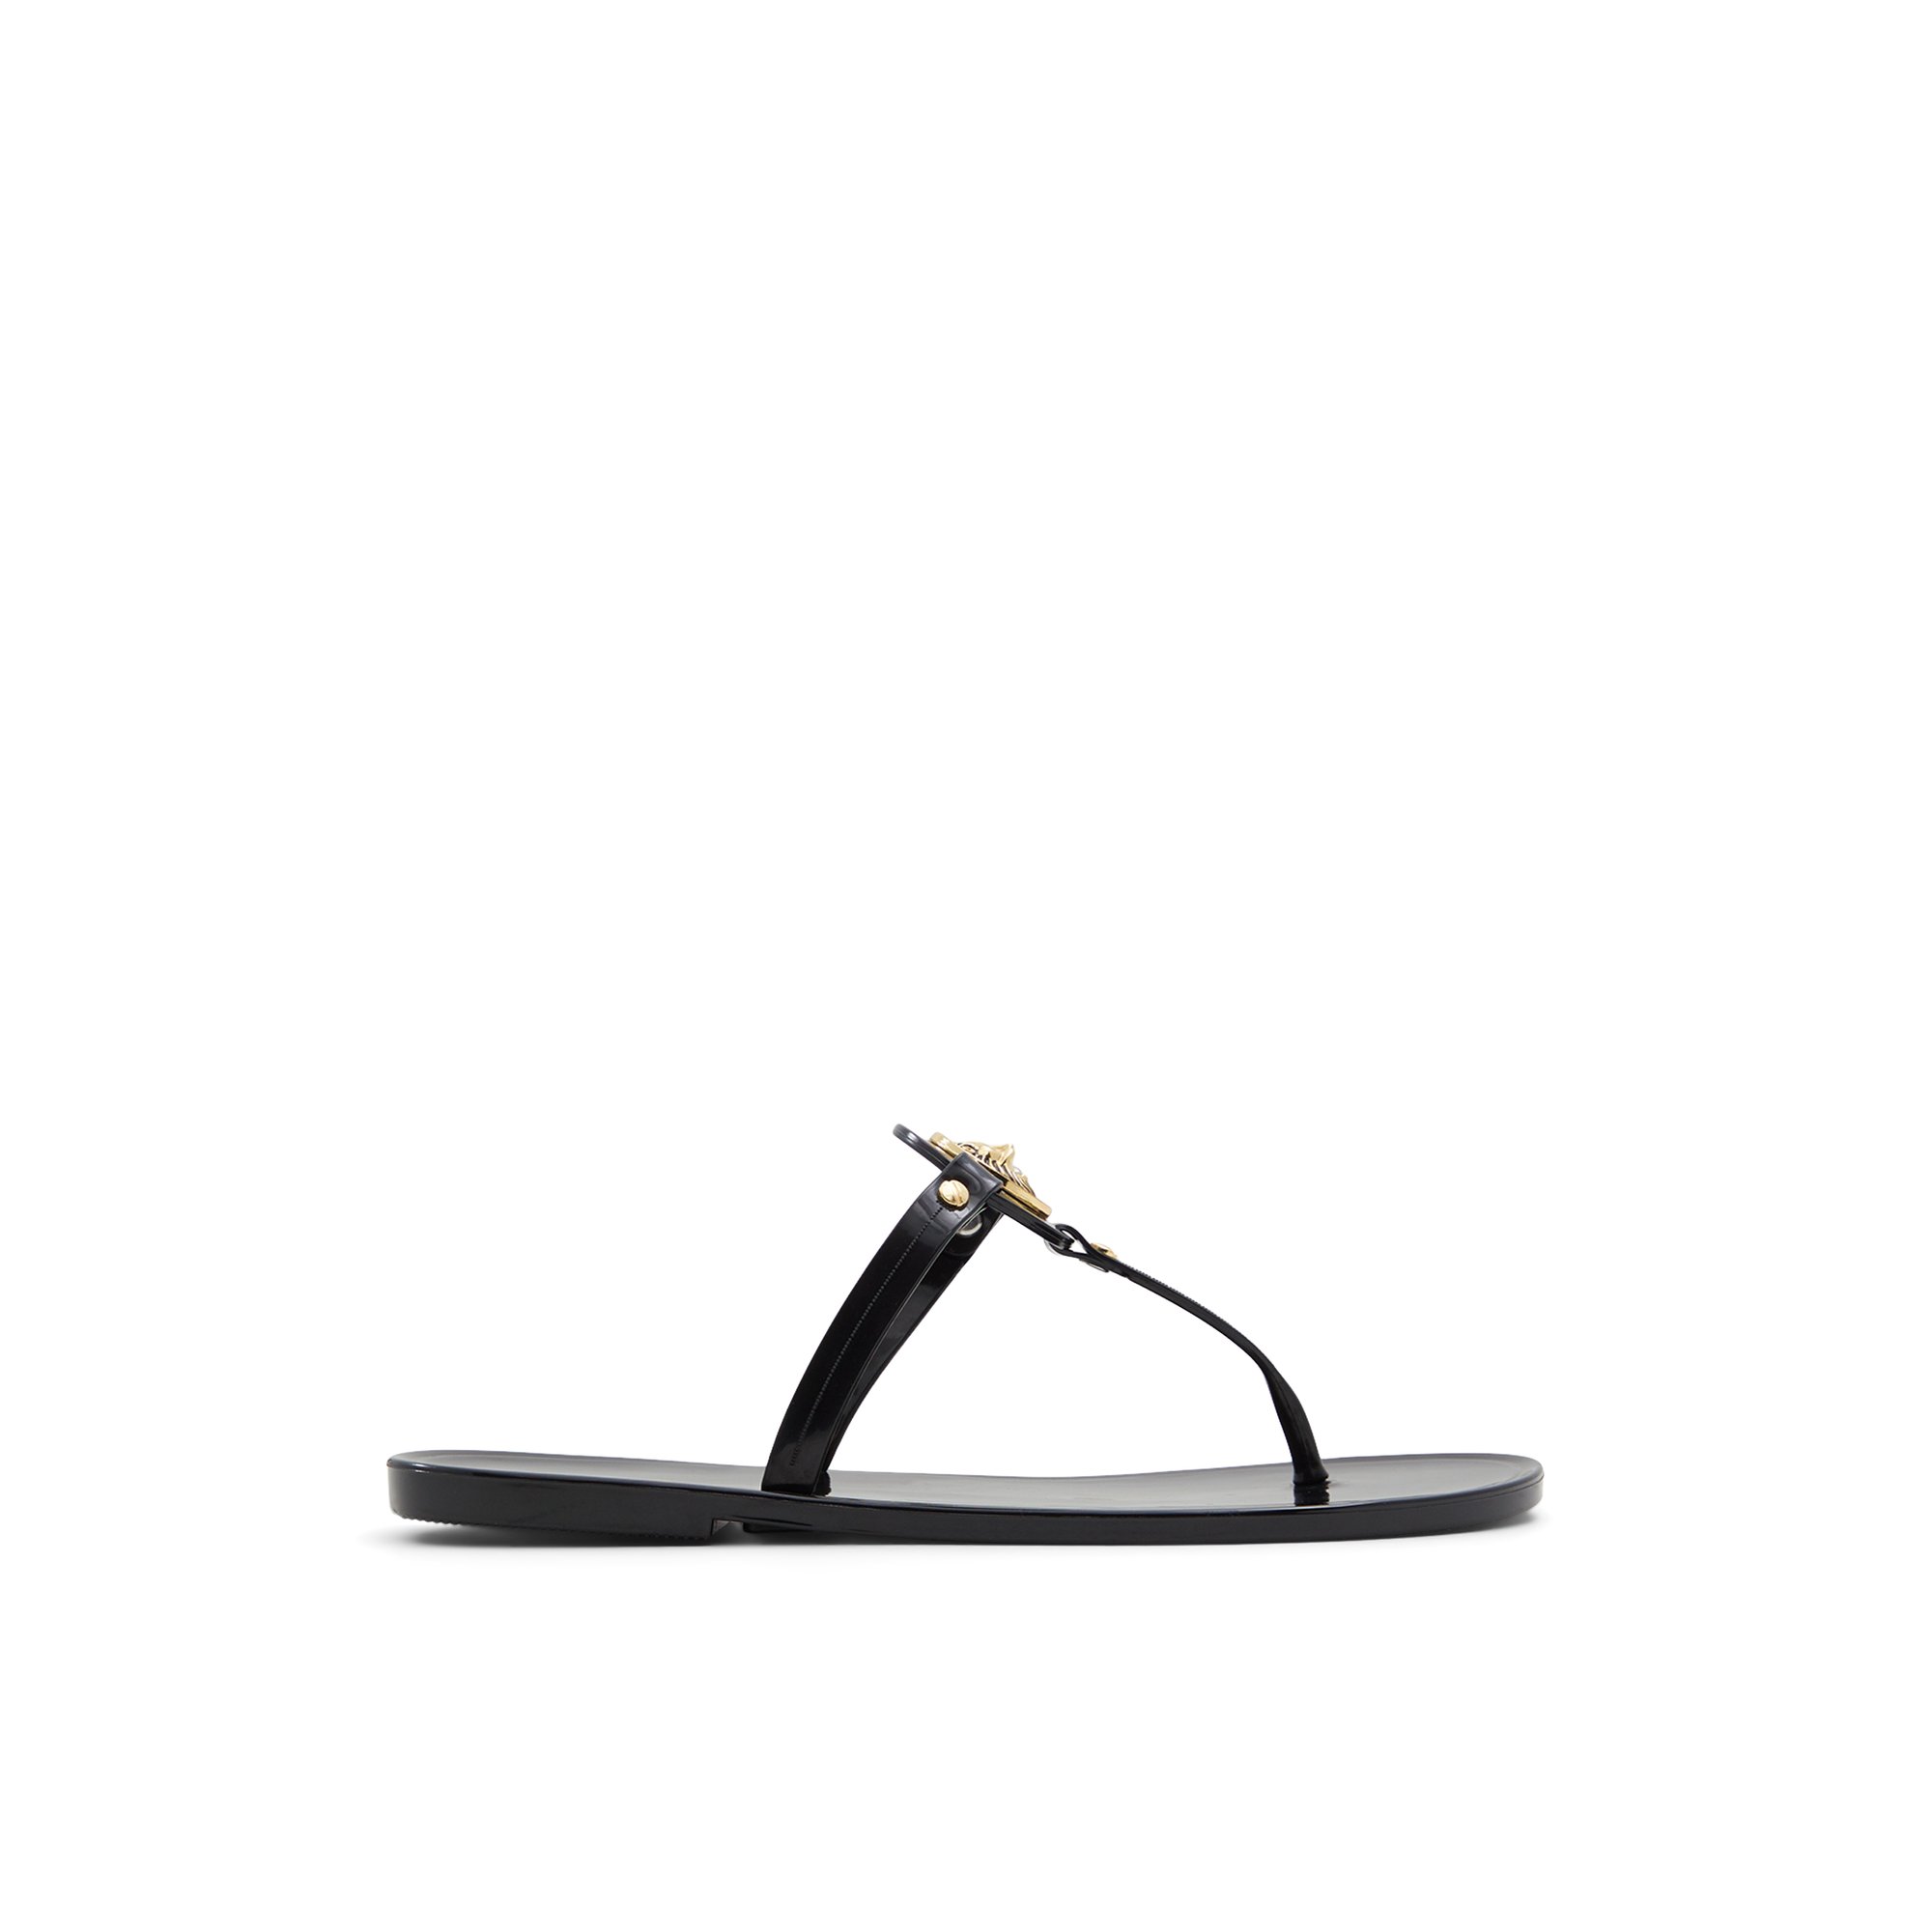 ALDO Gannaelden - Women's Flat Sandals - Black/Gold